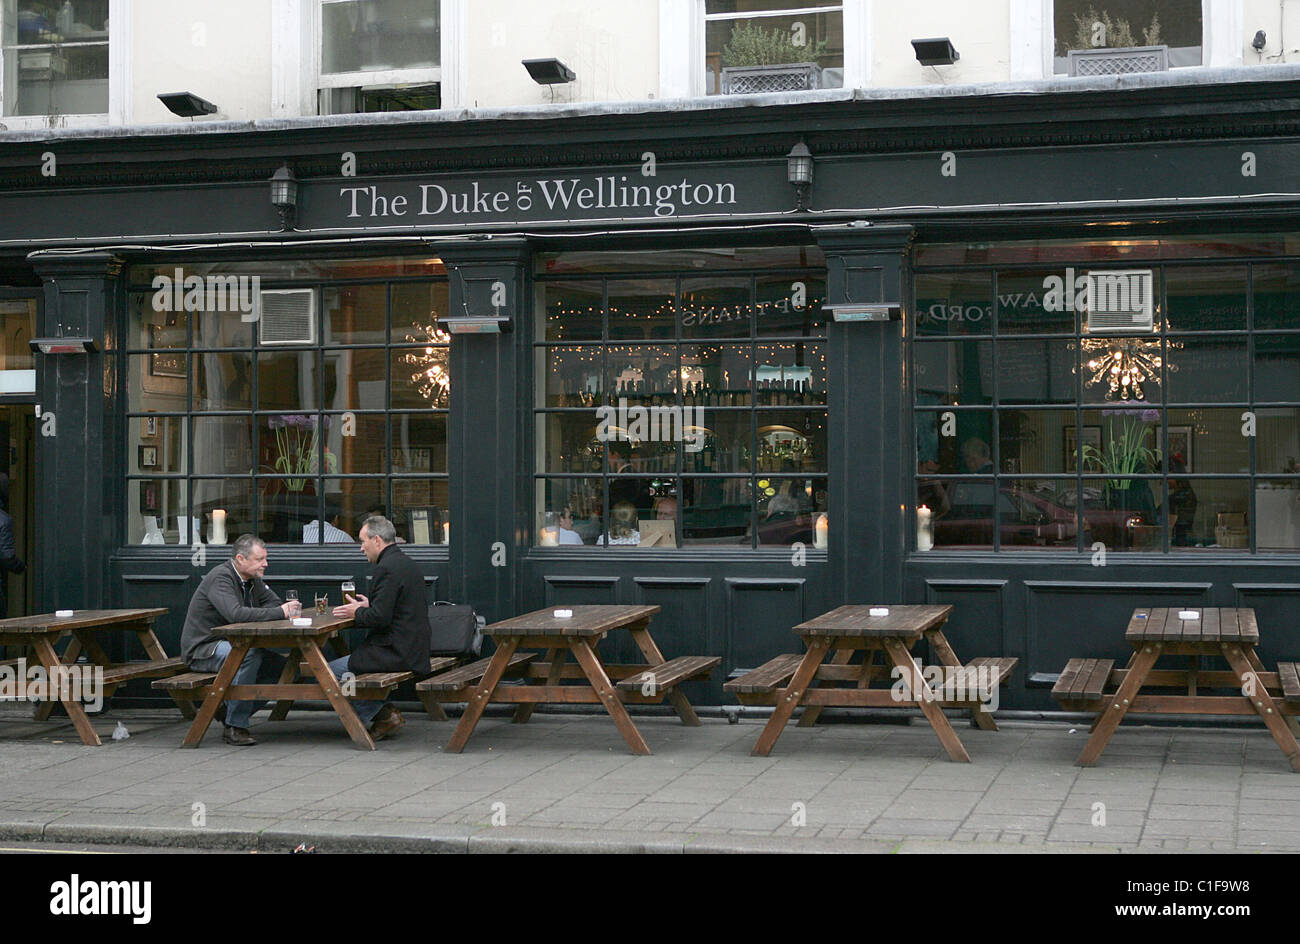 Duke of Wellington' pub London, England - 13.05.09 Stock Photo - Alamy